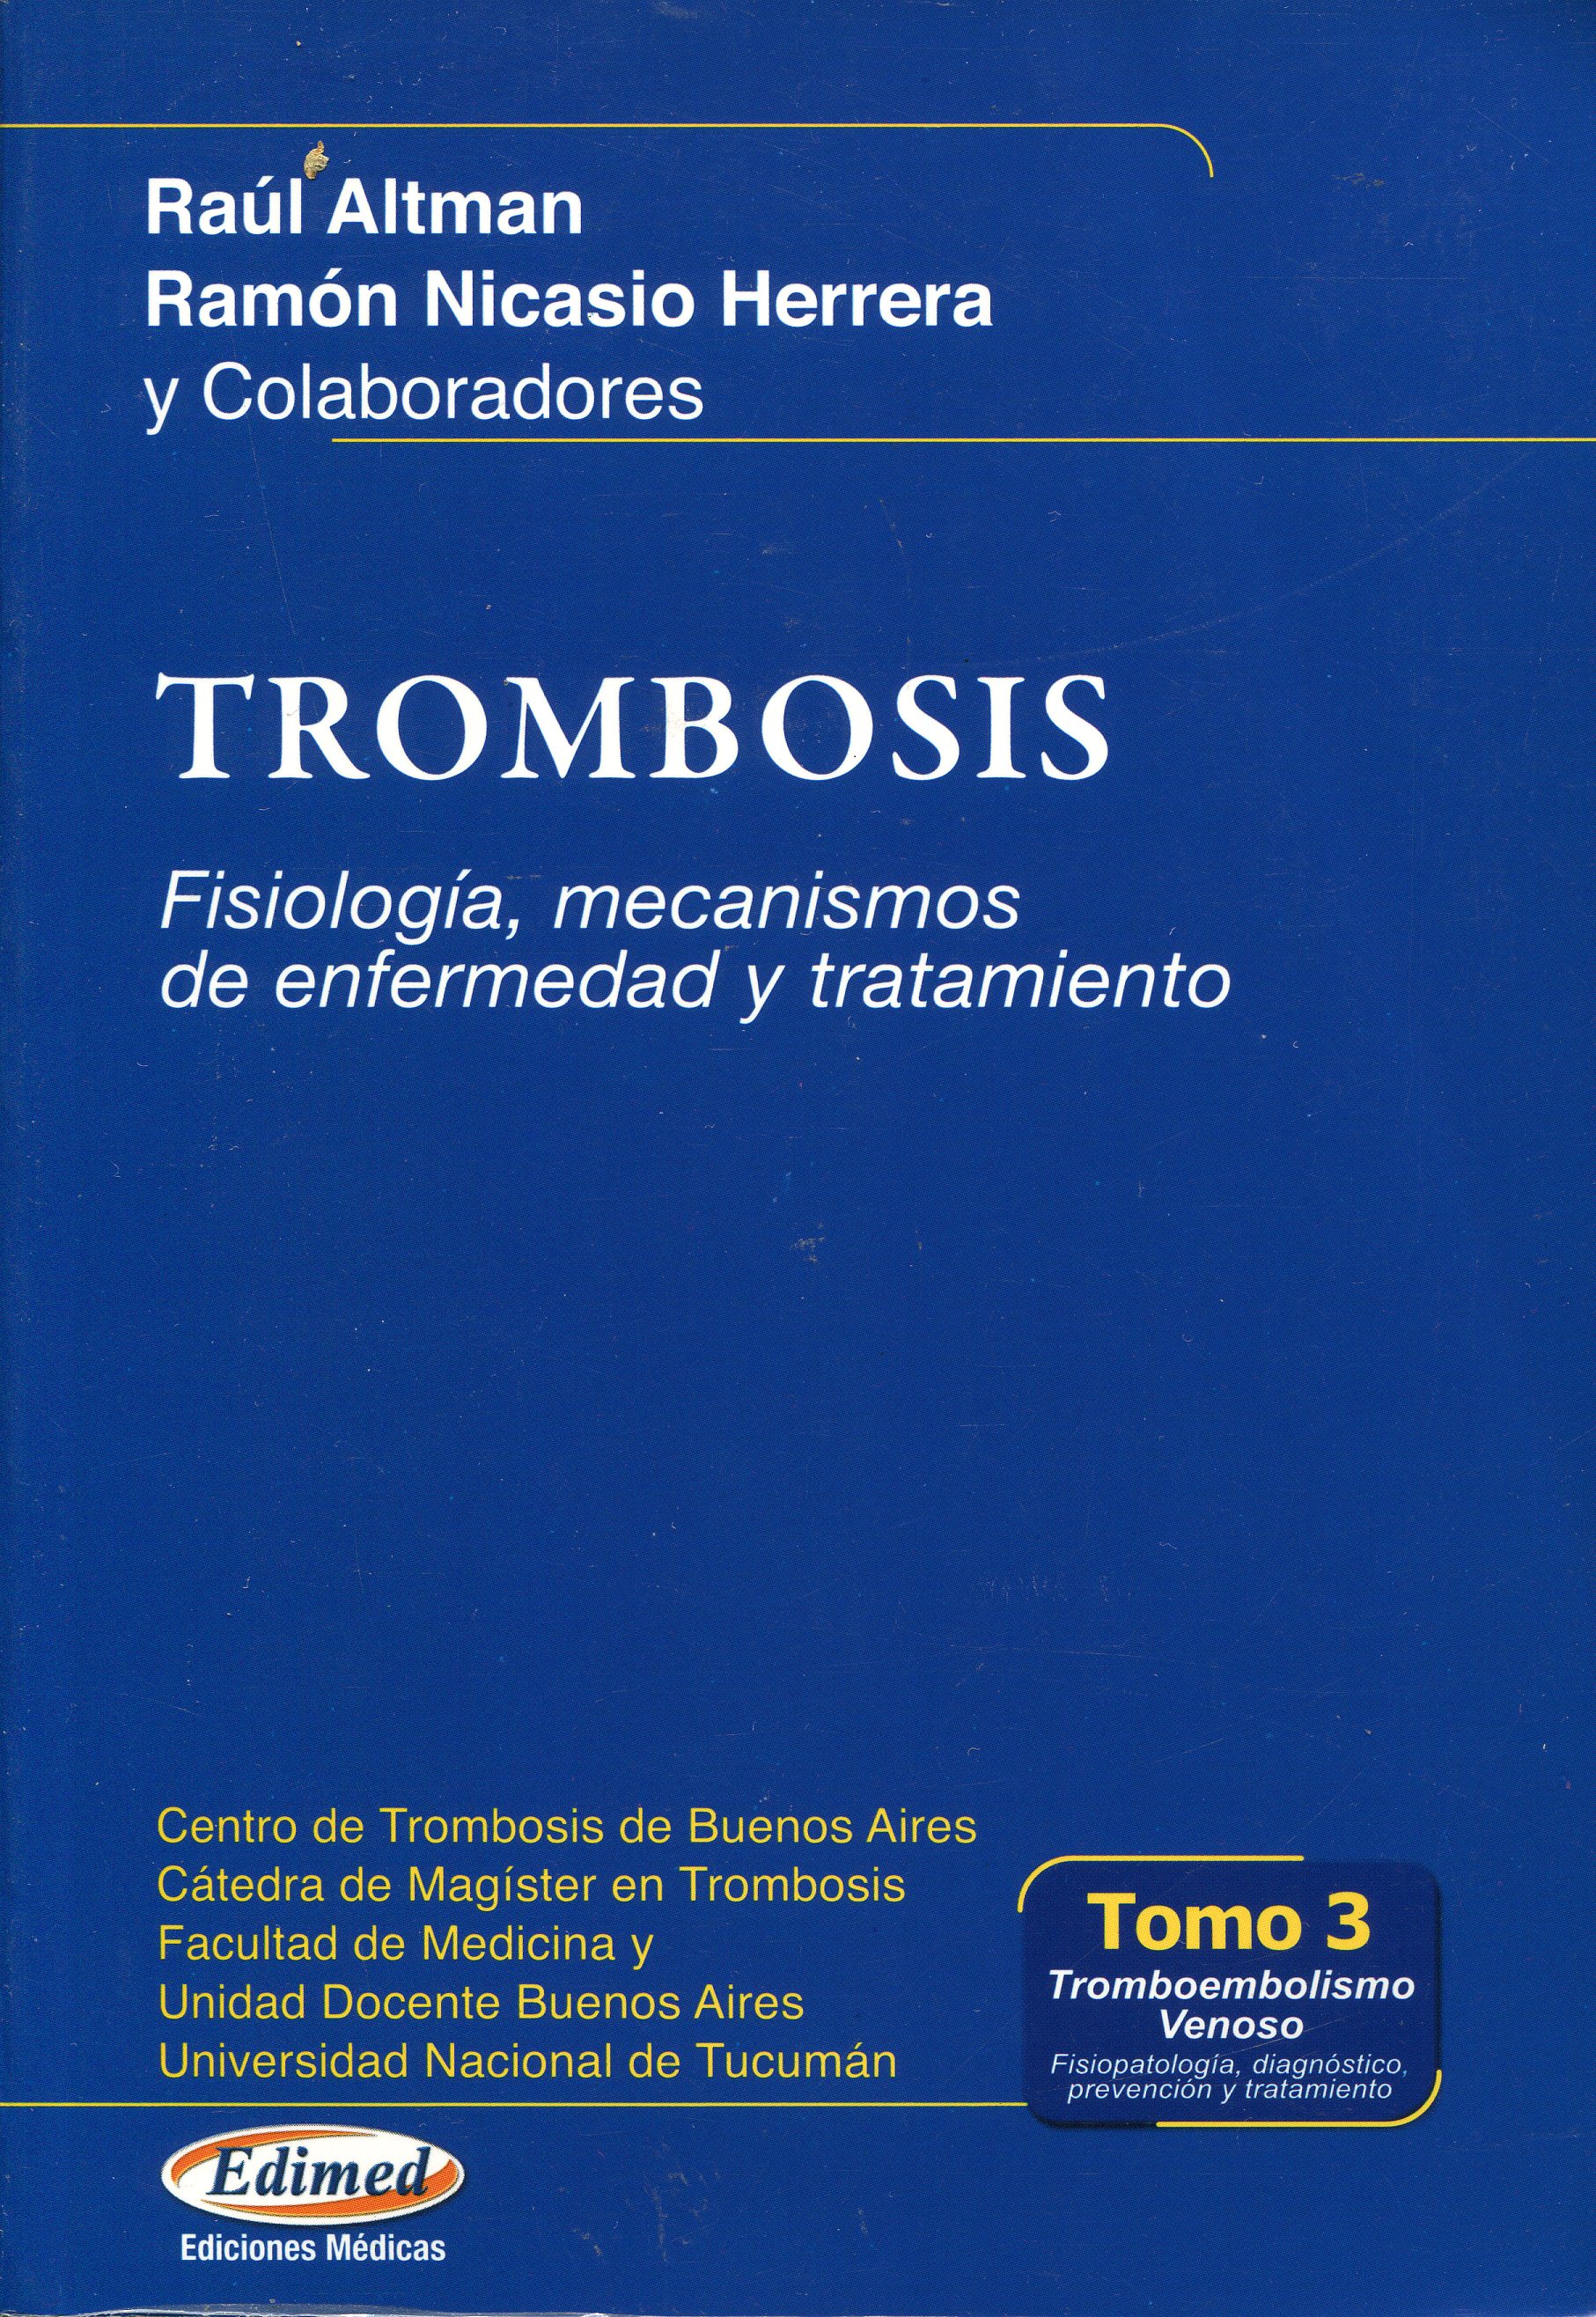 Libro Trombosis Dr. Raúl Altman